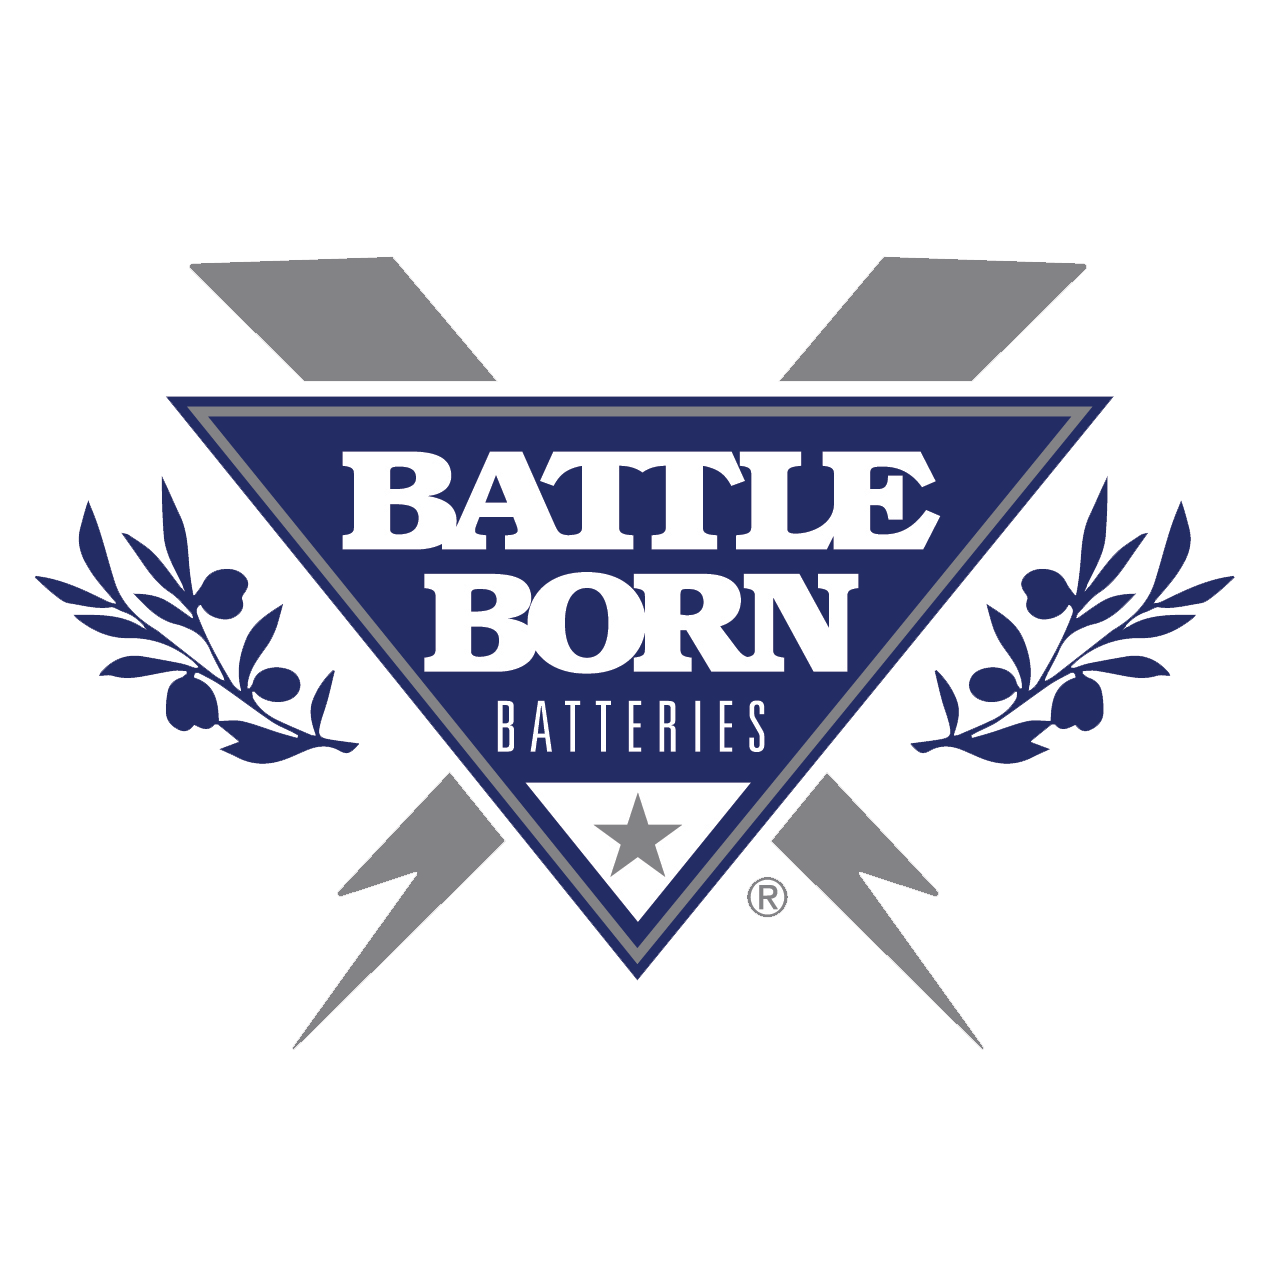 Battle born. Battle born Nevada. Battle born Band. Компания battle